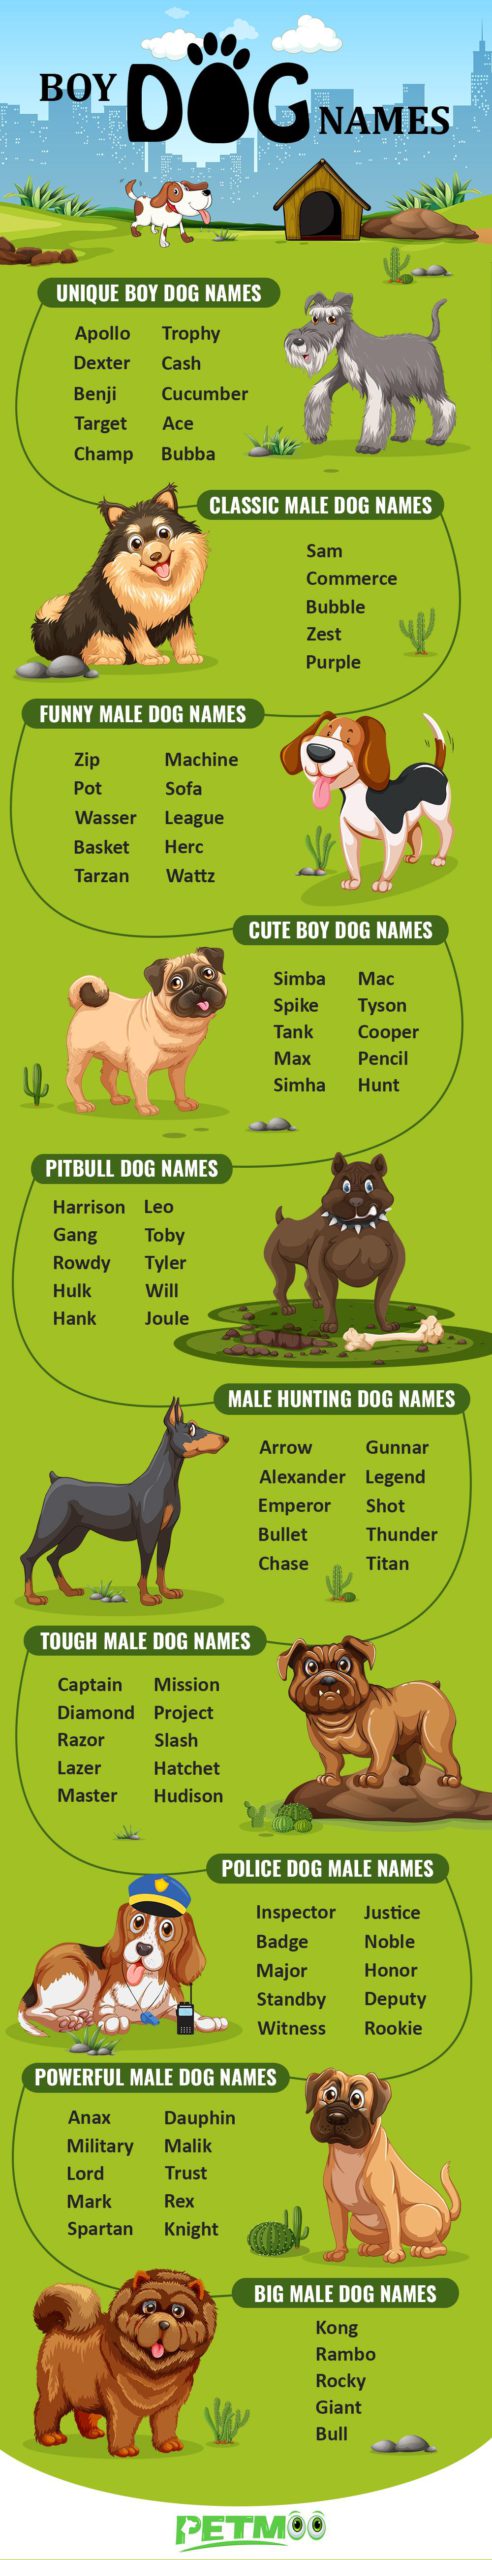 irish male dog names